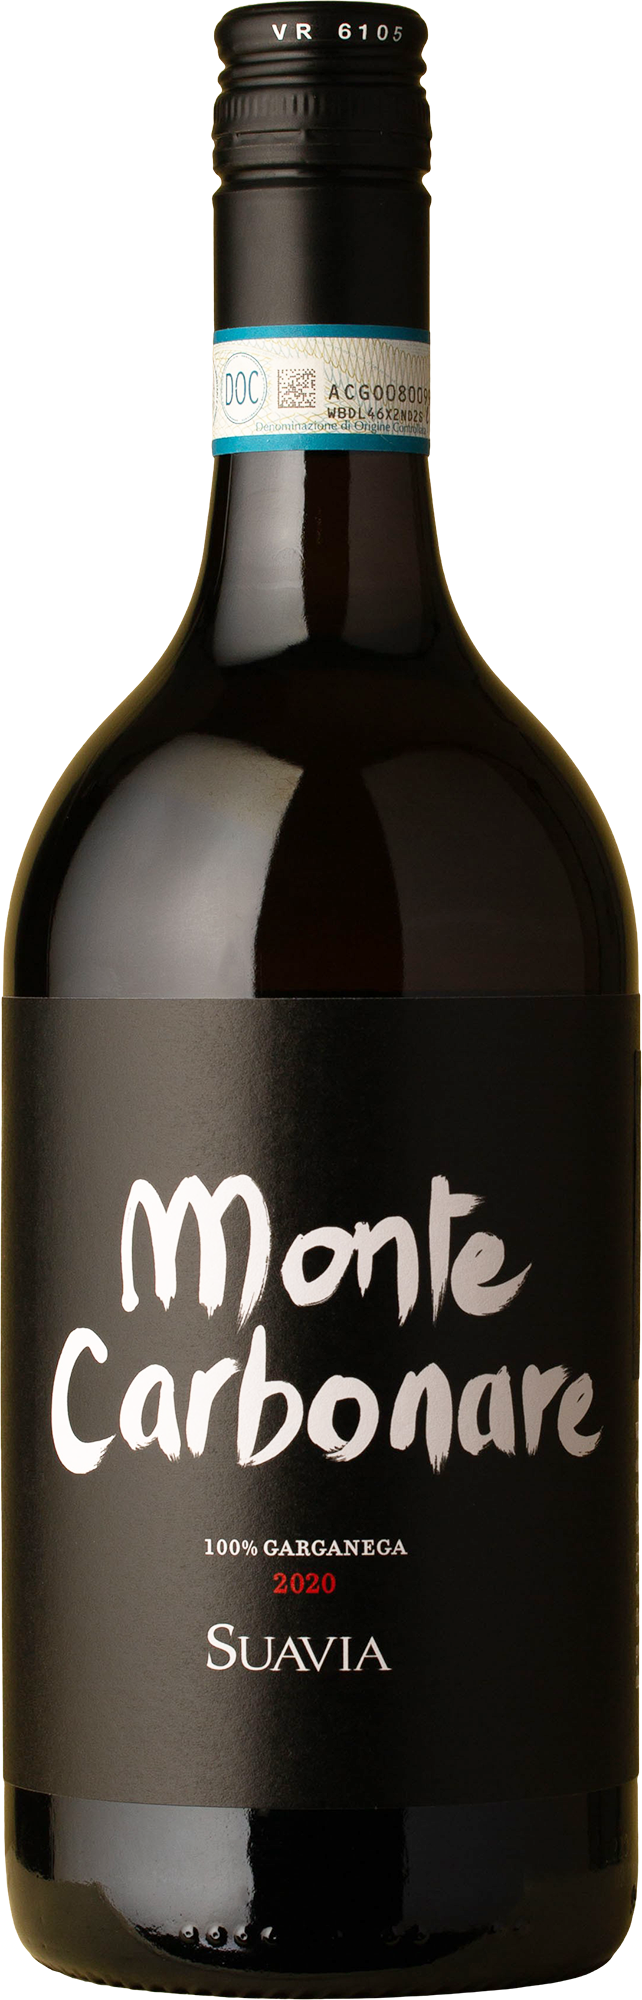 Suavia - Monte Carbonare Soave Classico Garganega 2020 White Wine